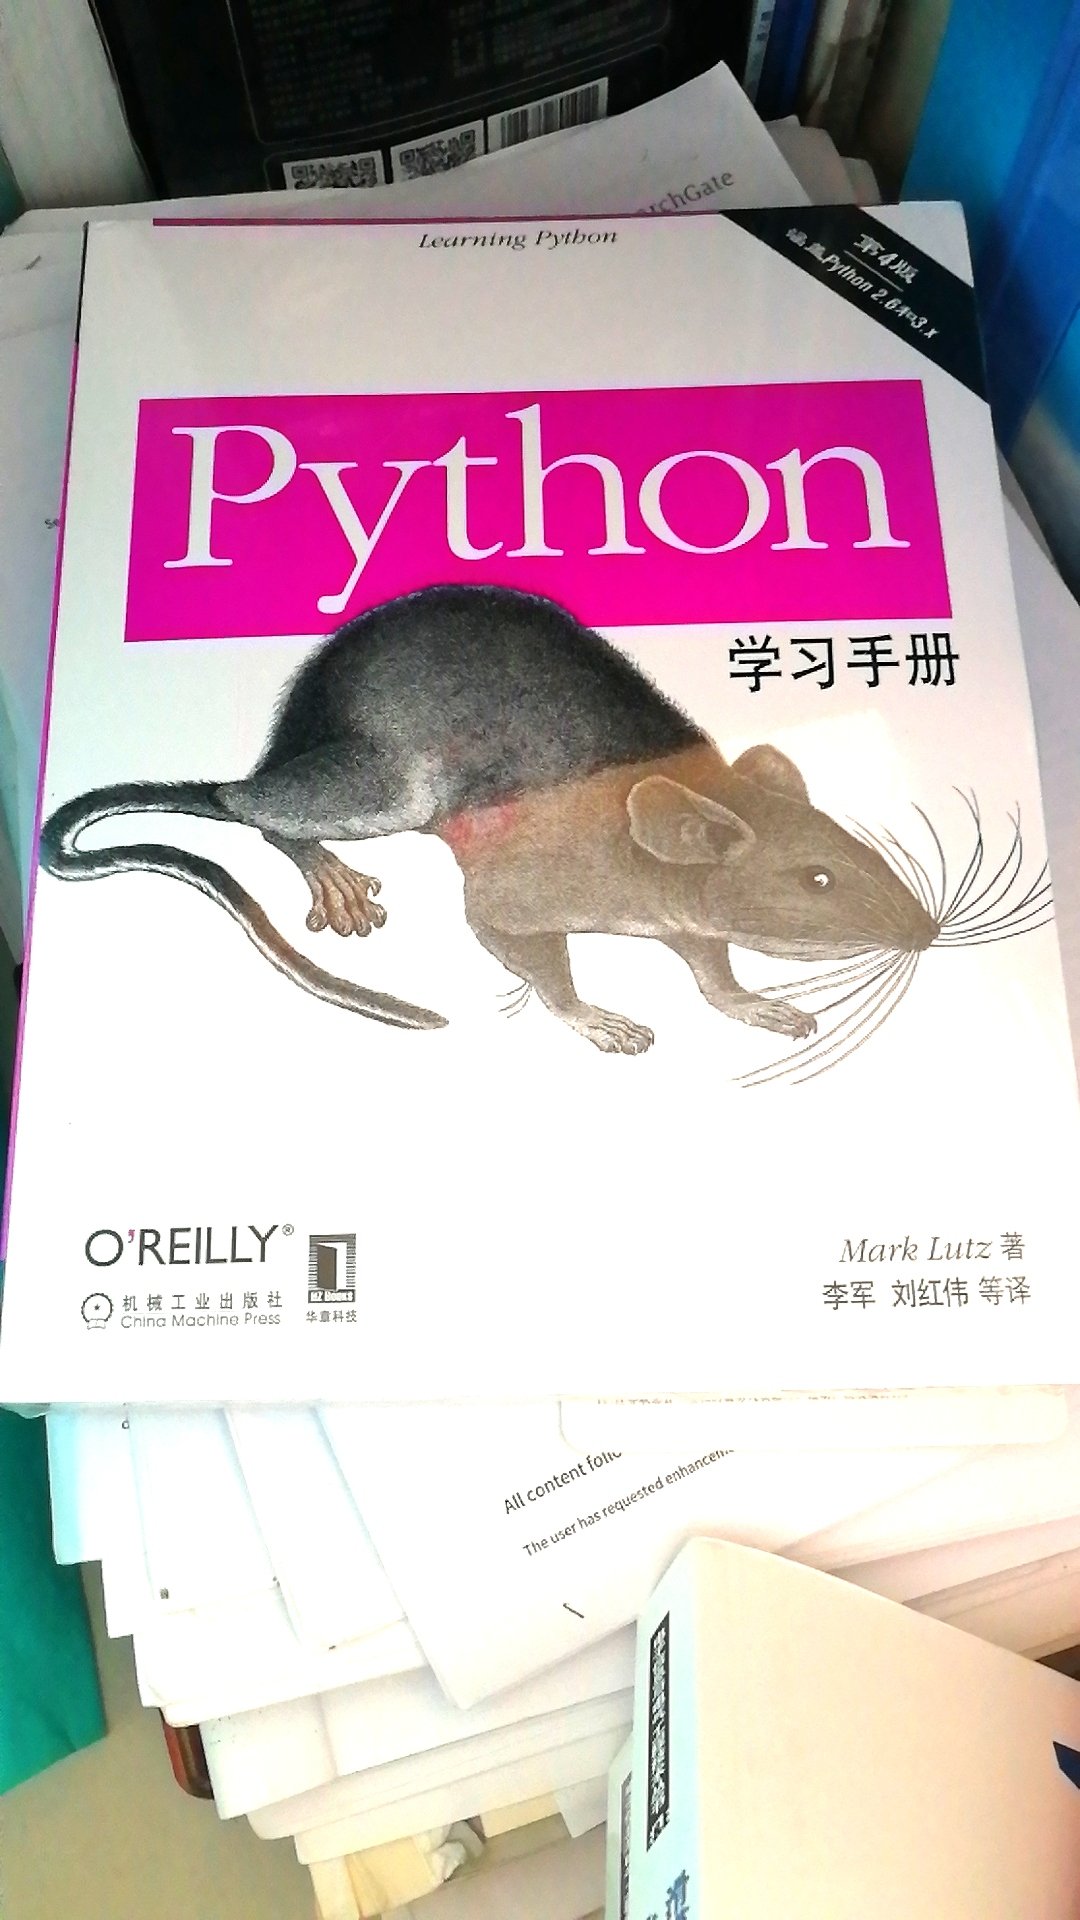 python学习手册，比较全面基础，适合刚学python的人，打折买的很实惠